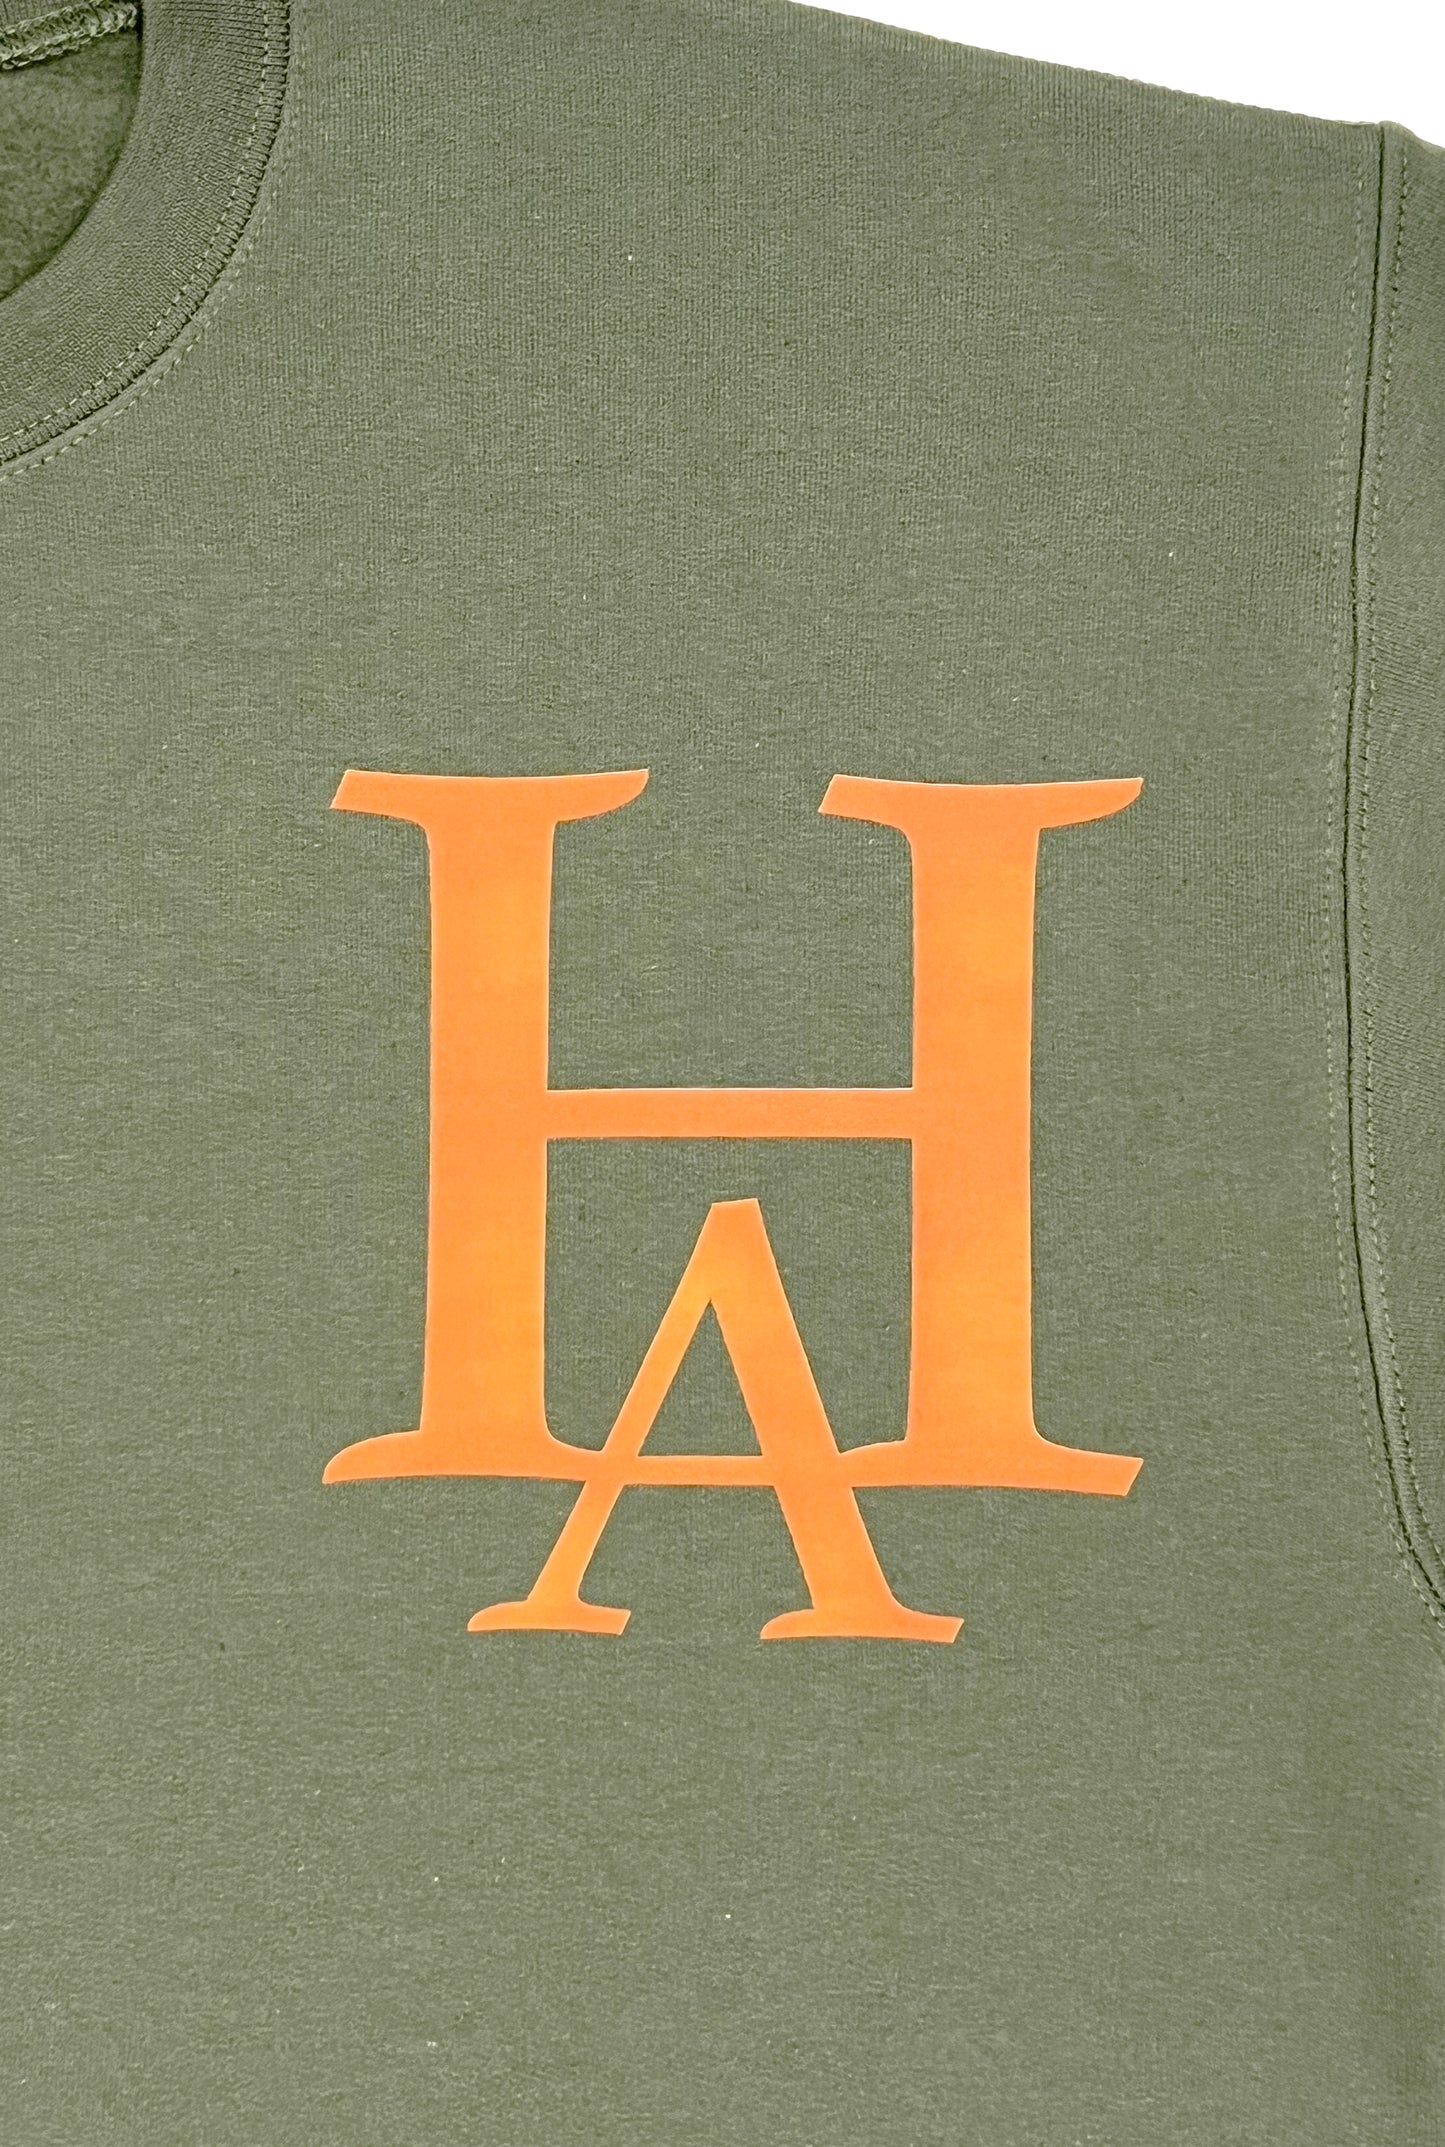 Harvest Army Crewneck Sweatshirt In Green